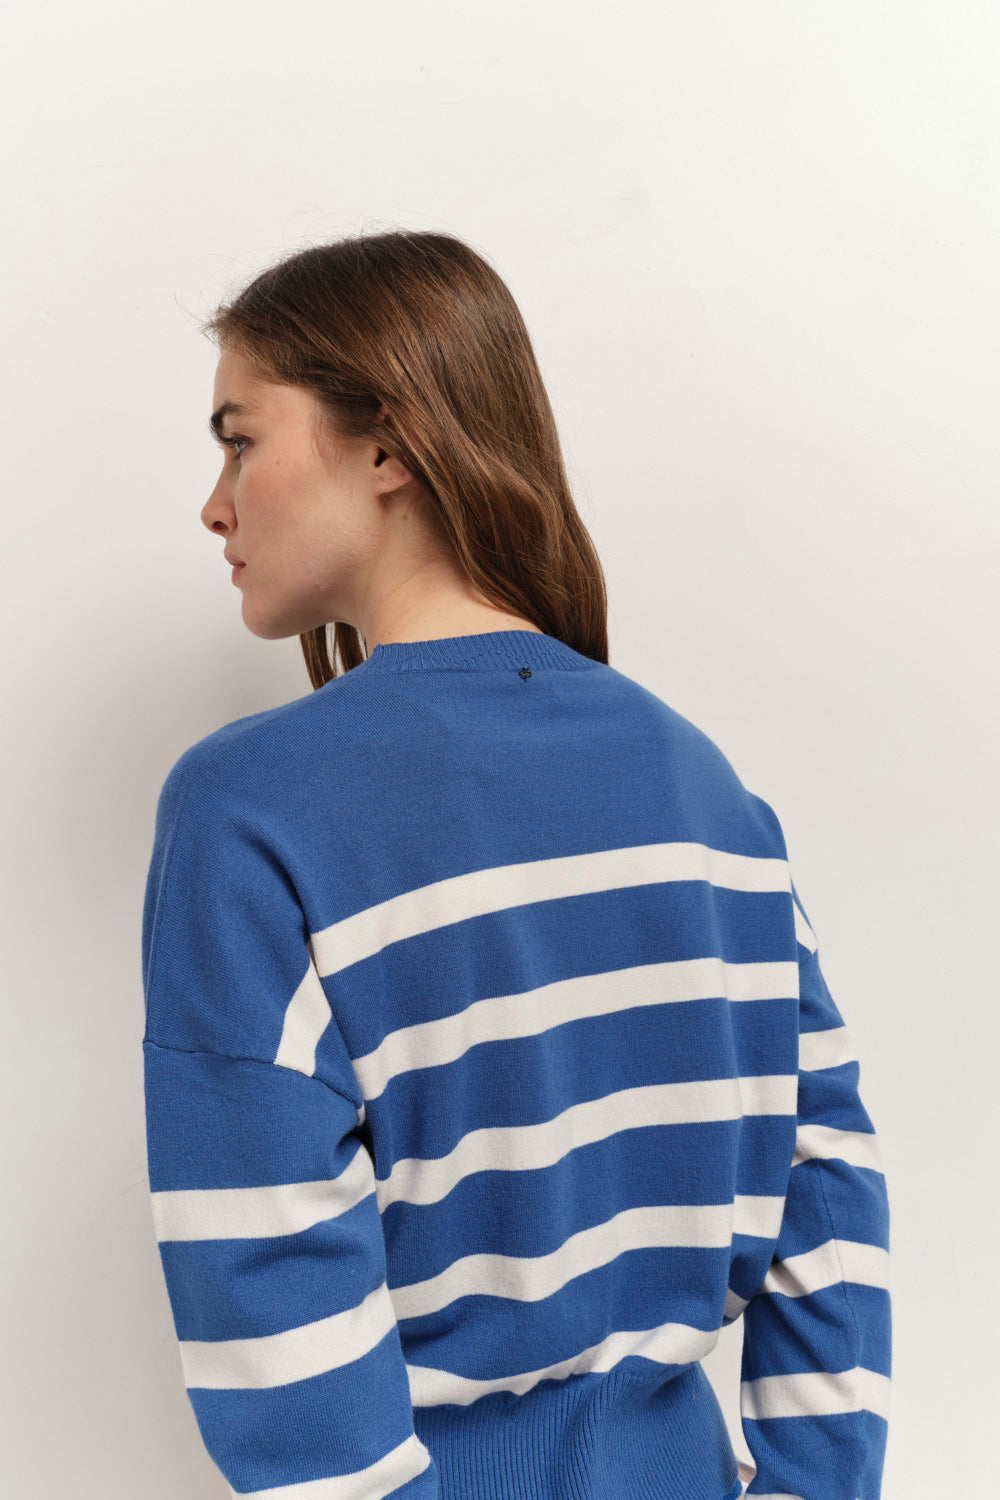 TIANA - Pull santorin blue tricot à motif rayures broderie danseuse